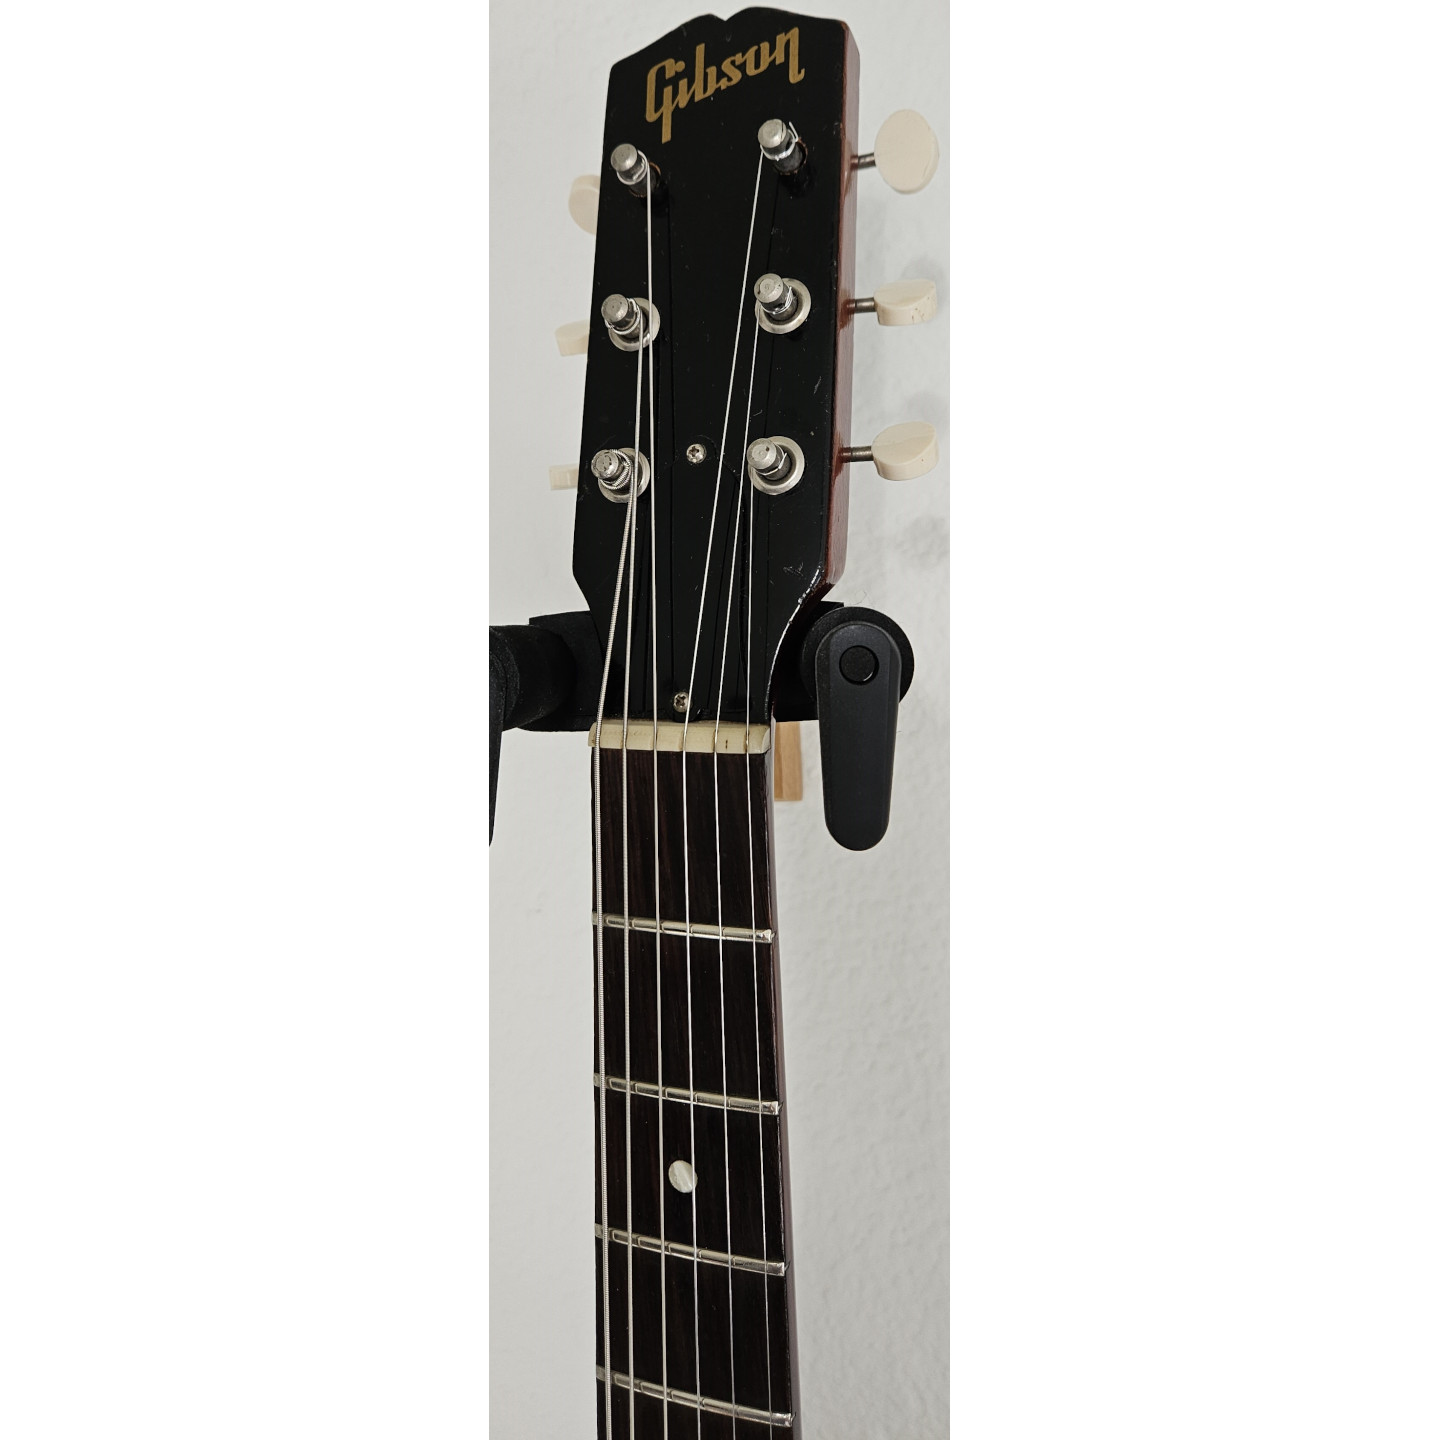 1966 Gibson Melody Maker Vibrola Cherry SG Vintage Electric Guitar